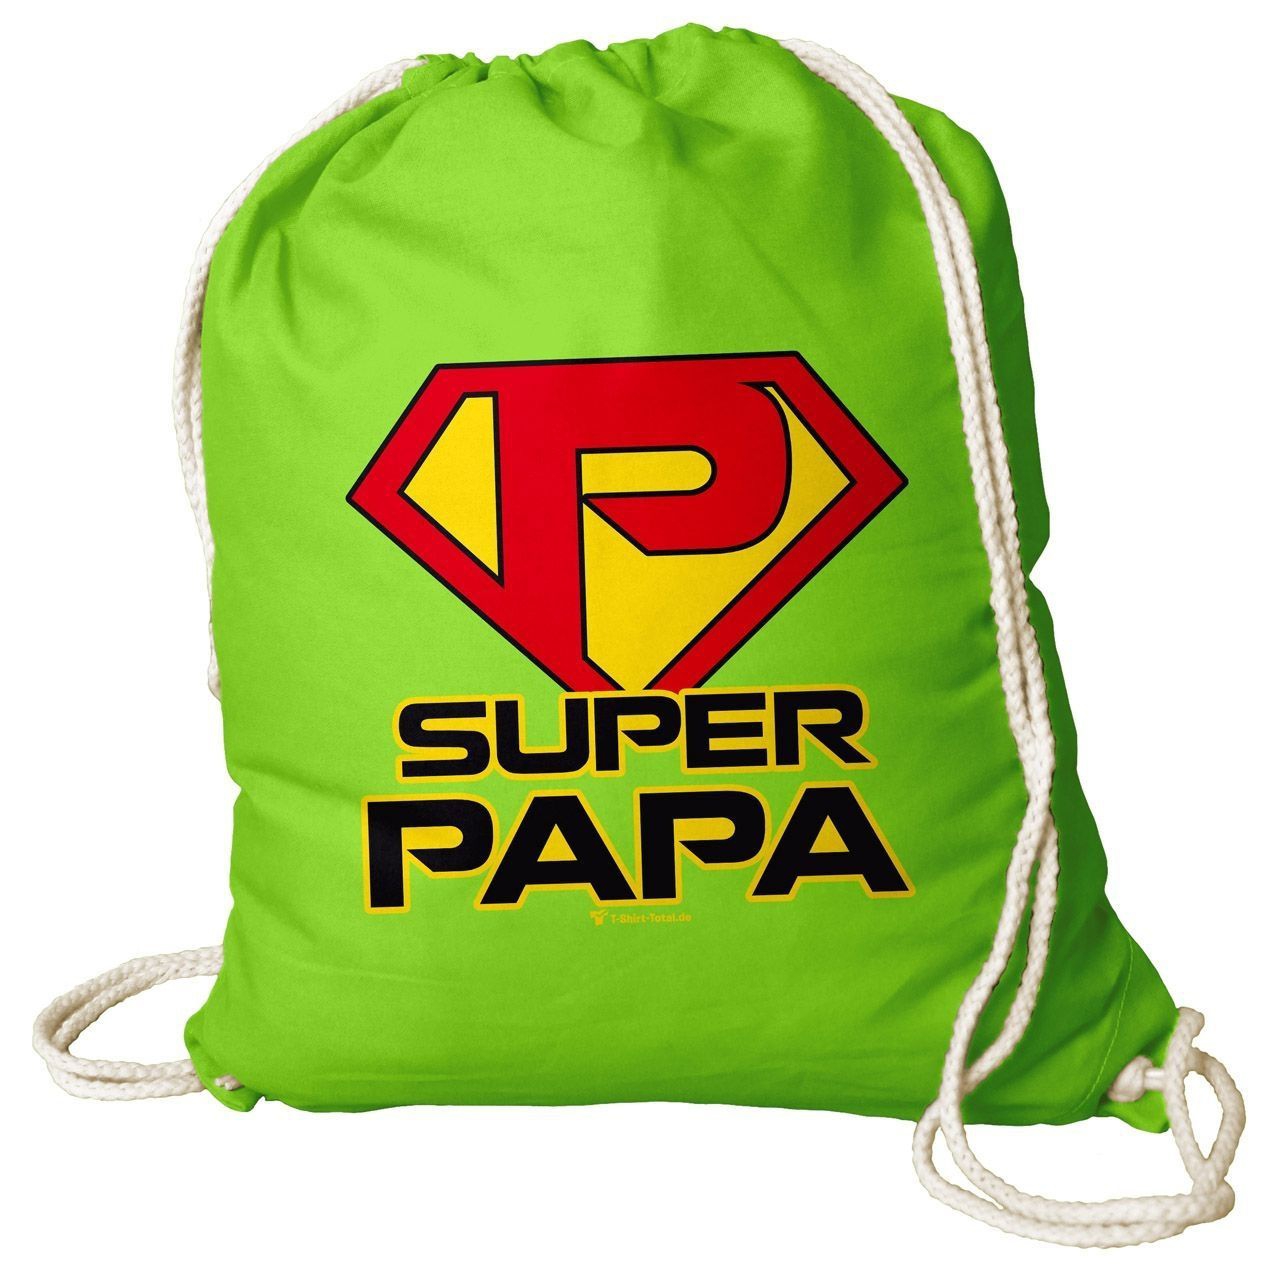 Super Papa Rucksack Beutel hellgrün